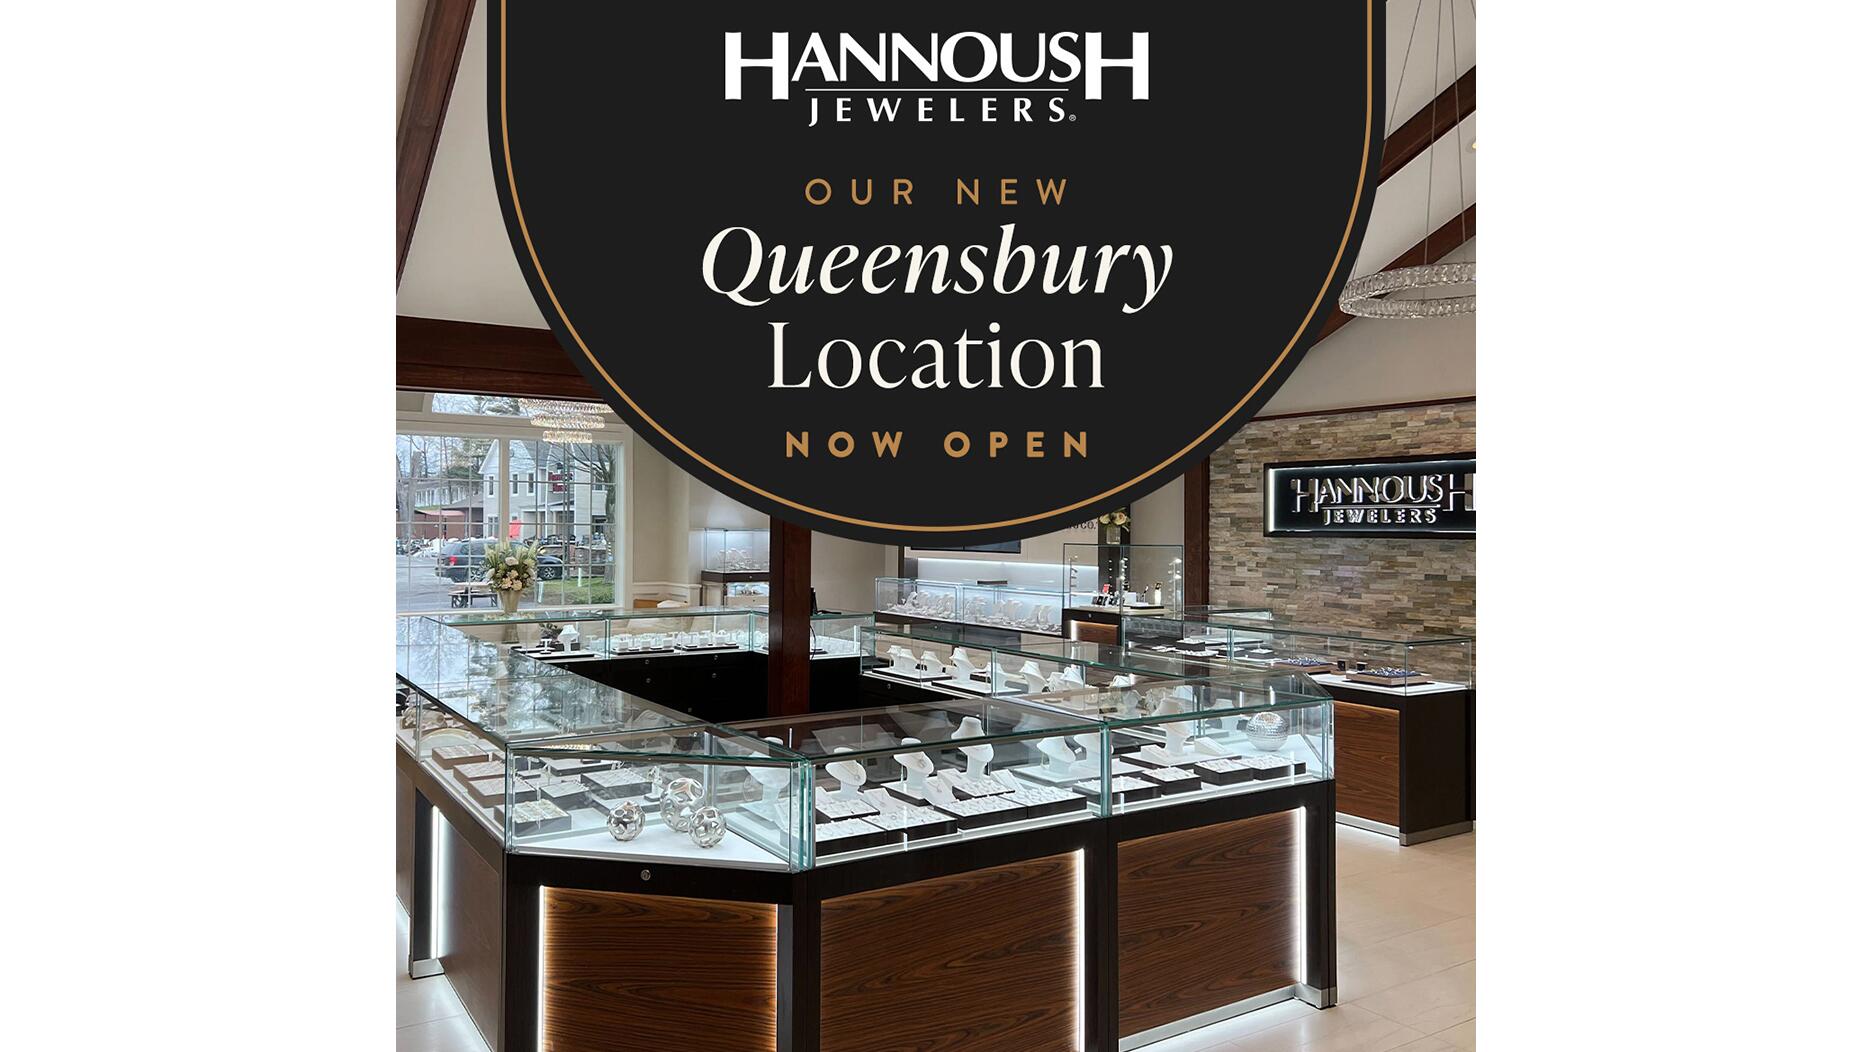 Hannoush Jewelers Queensbury NY location